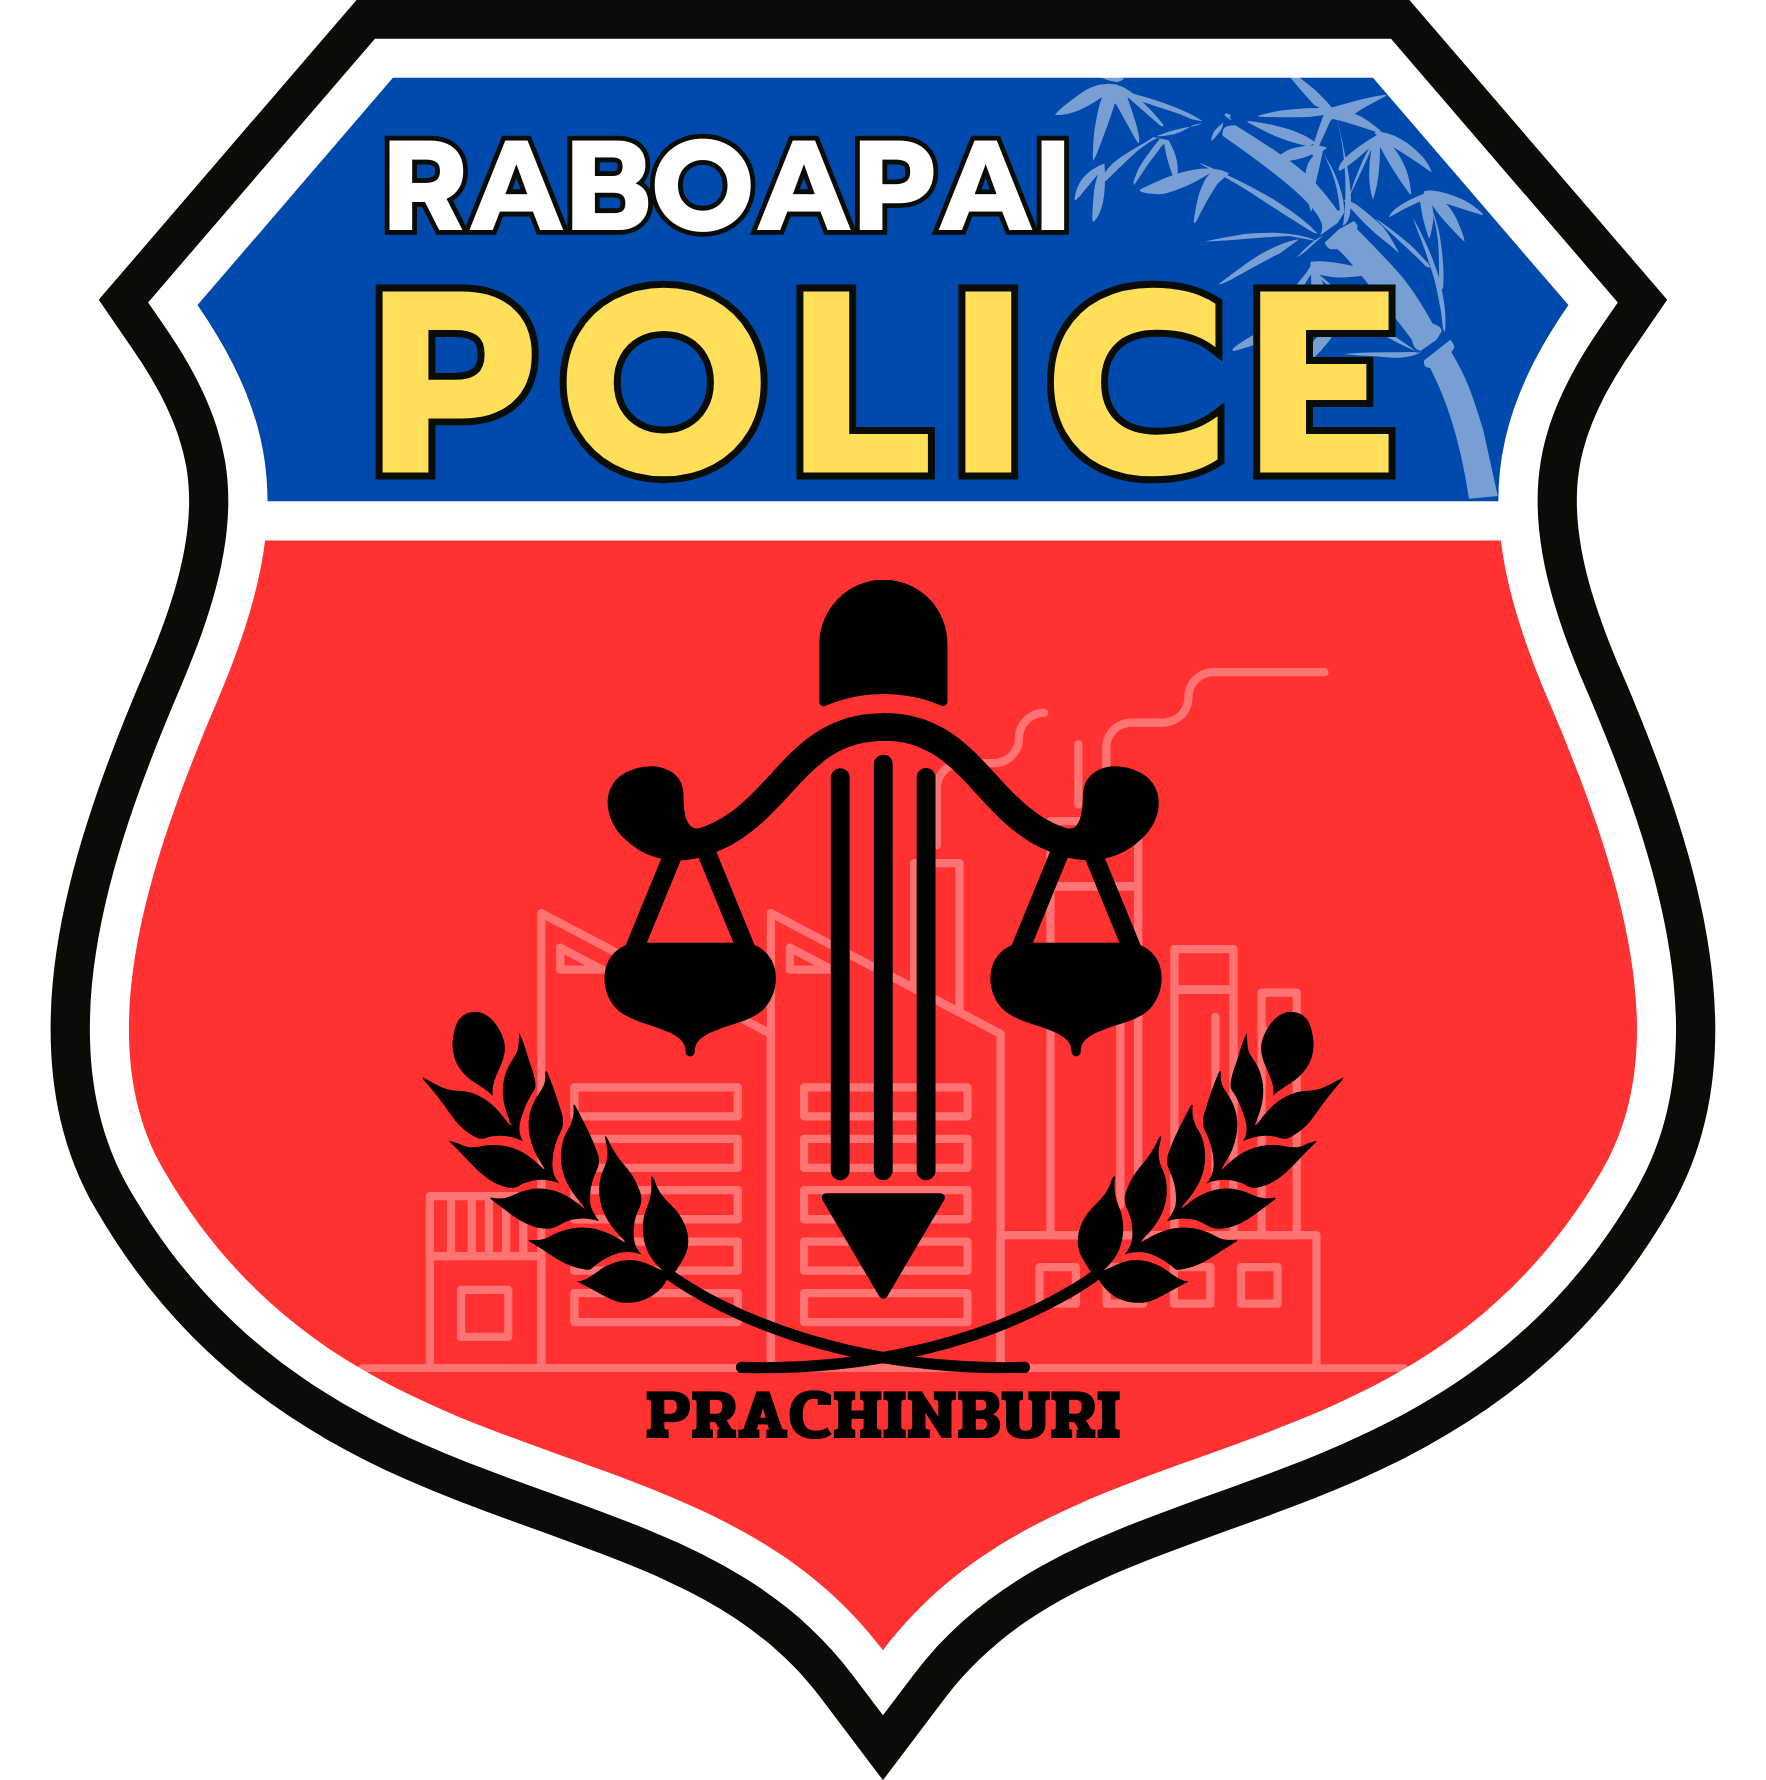 RABOAPAI POLICE STATION logo